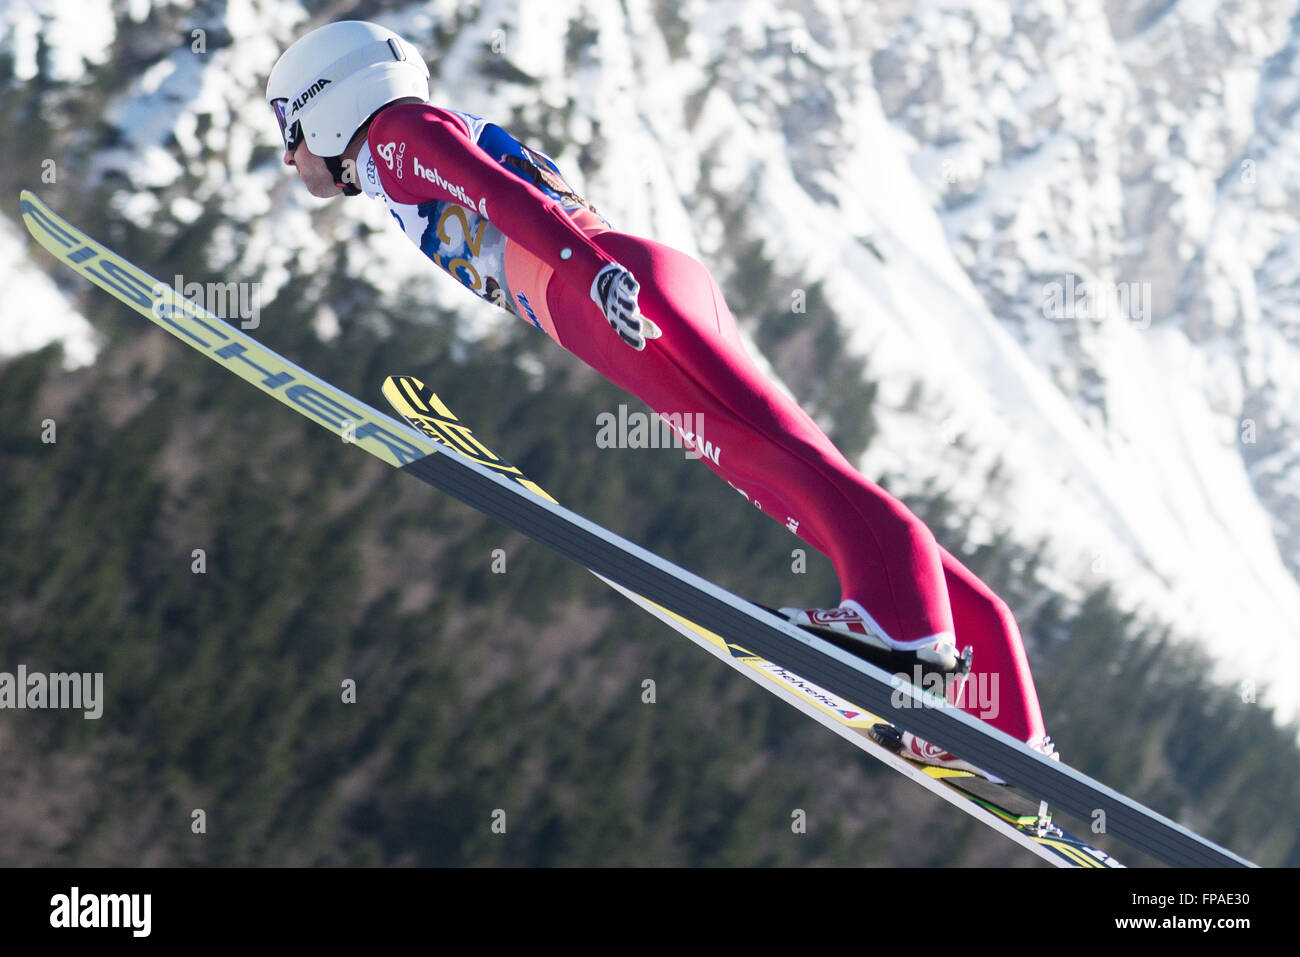 Planica, Slovenia. 18th Mar, 2016. Simon Ammann competes during Planica FIS Ski Jumping World Cup final on the March 18, 2016 in Planica, Slovenia. © Rok Rakun/Pacific Press/Alamy Live News Stock Photo